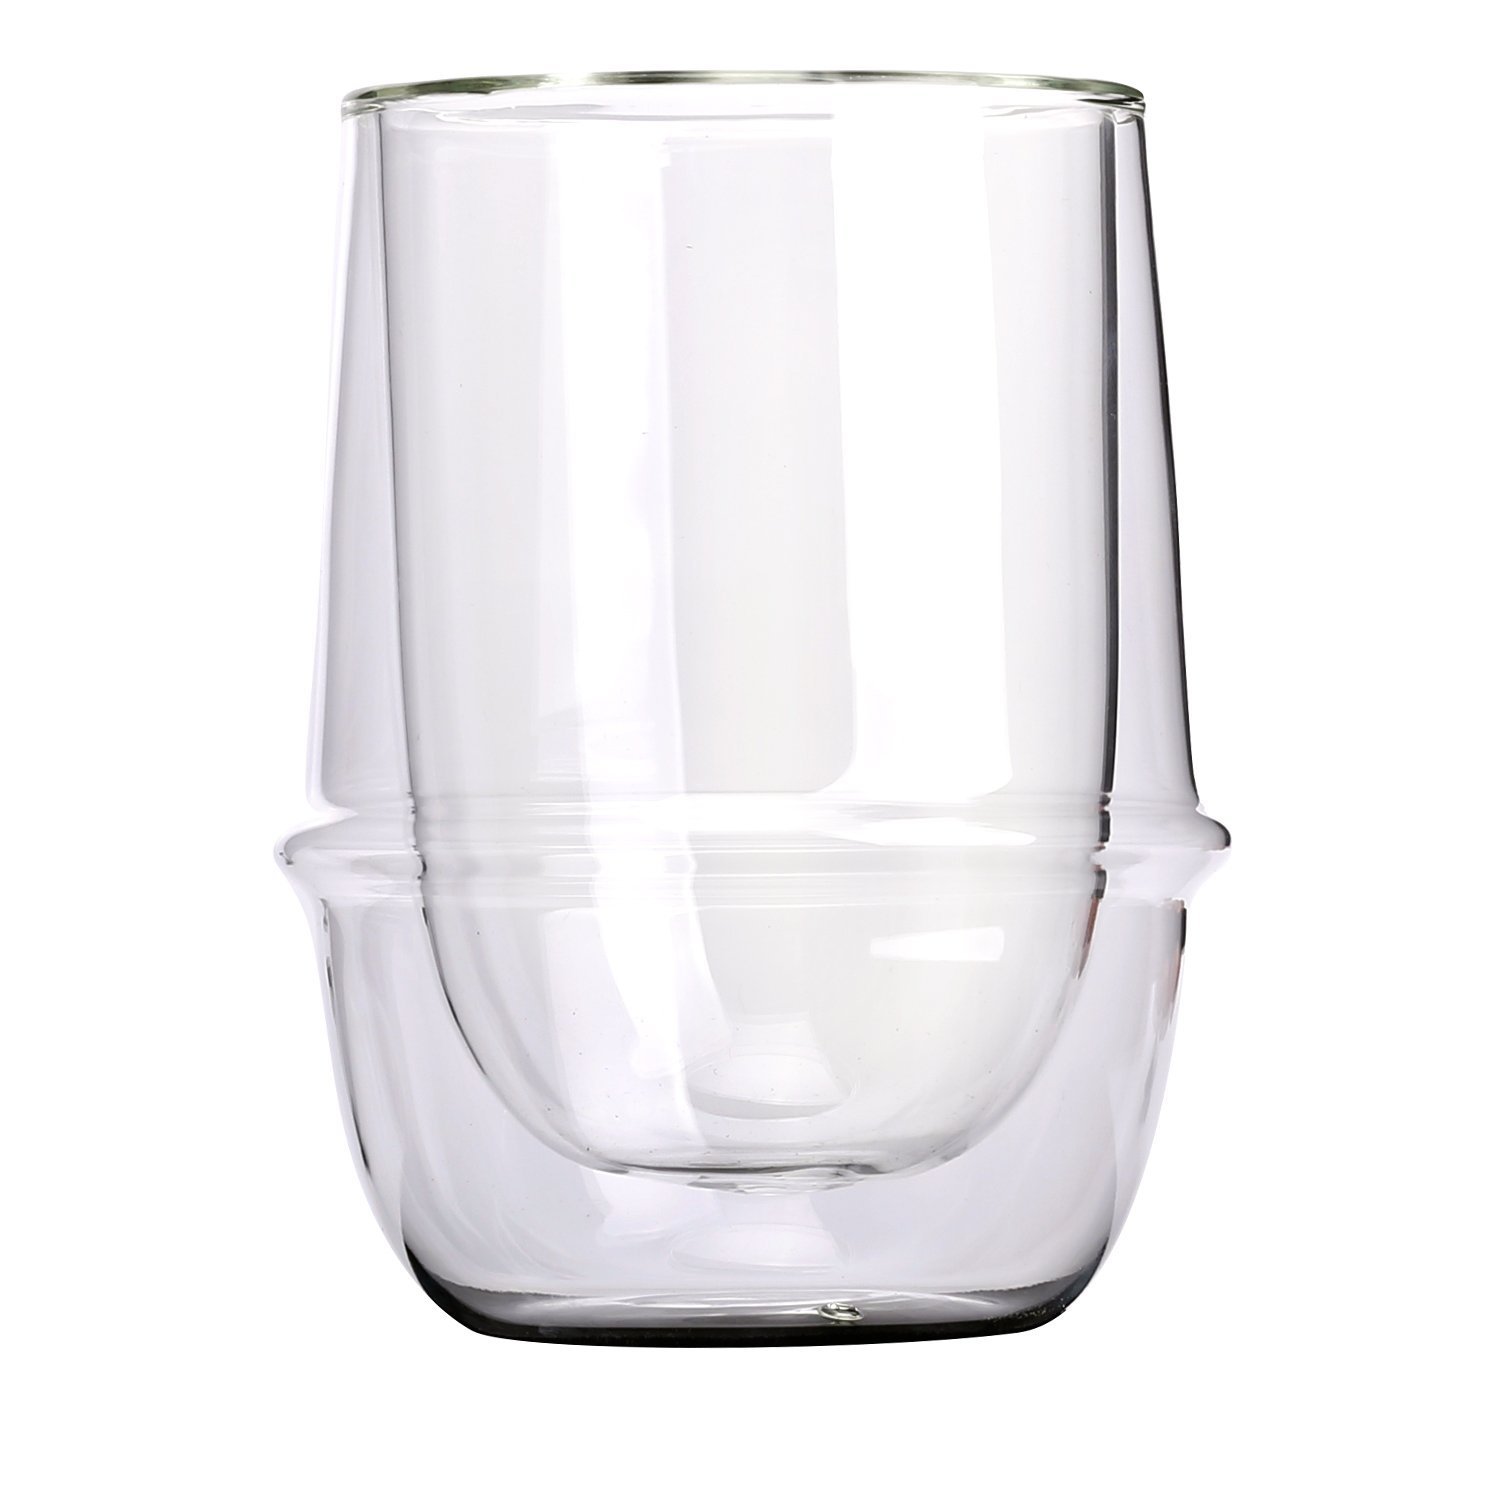 Set of 2 Double-Walled Kinto KRONOS 350 ml (11.83 fl. oz.) Iced Tea Glasses - Maintain Temperature - Prevent Condensation